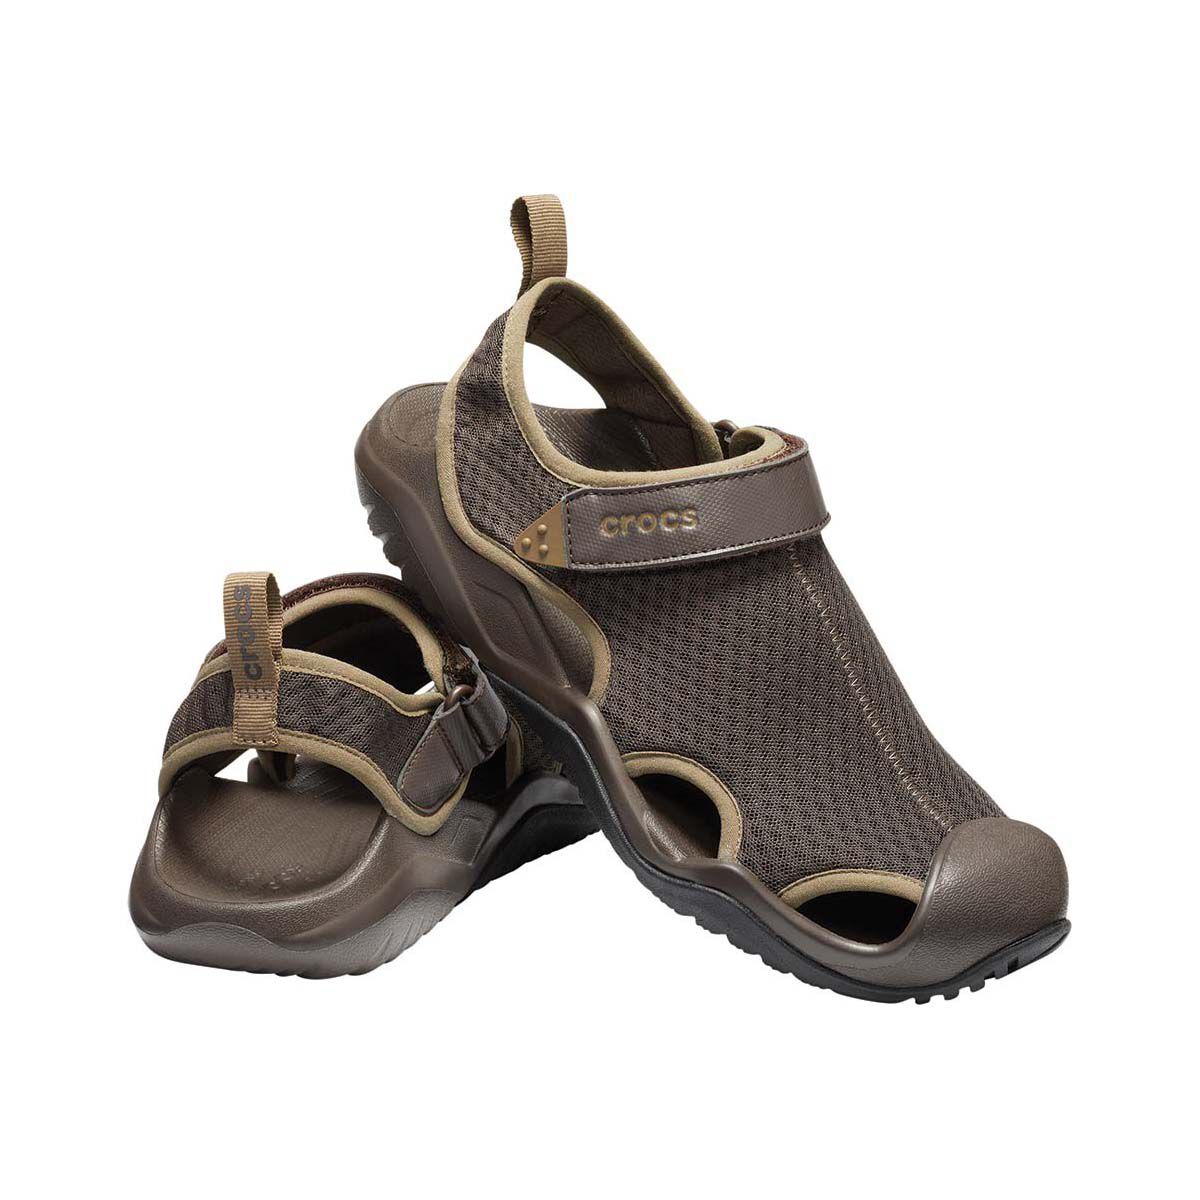 Buy Crocs Men's Swiftwater Mesh Deck Sandals at Ubuy Qatar